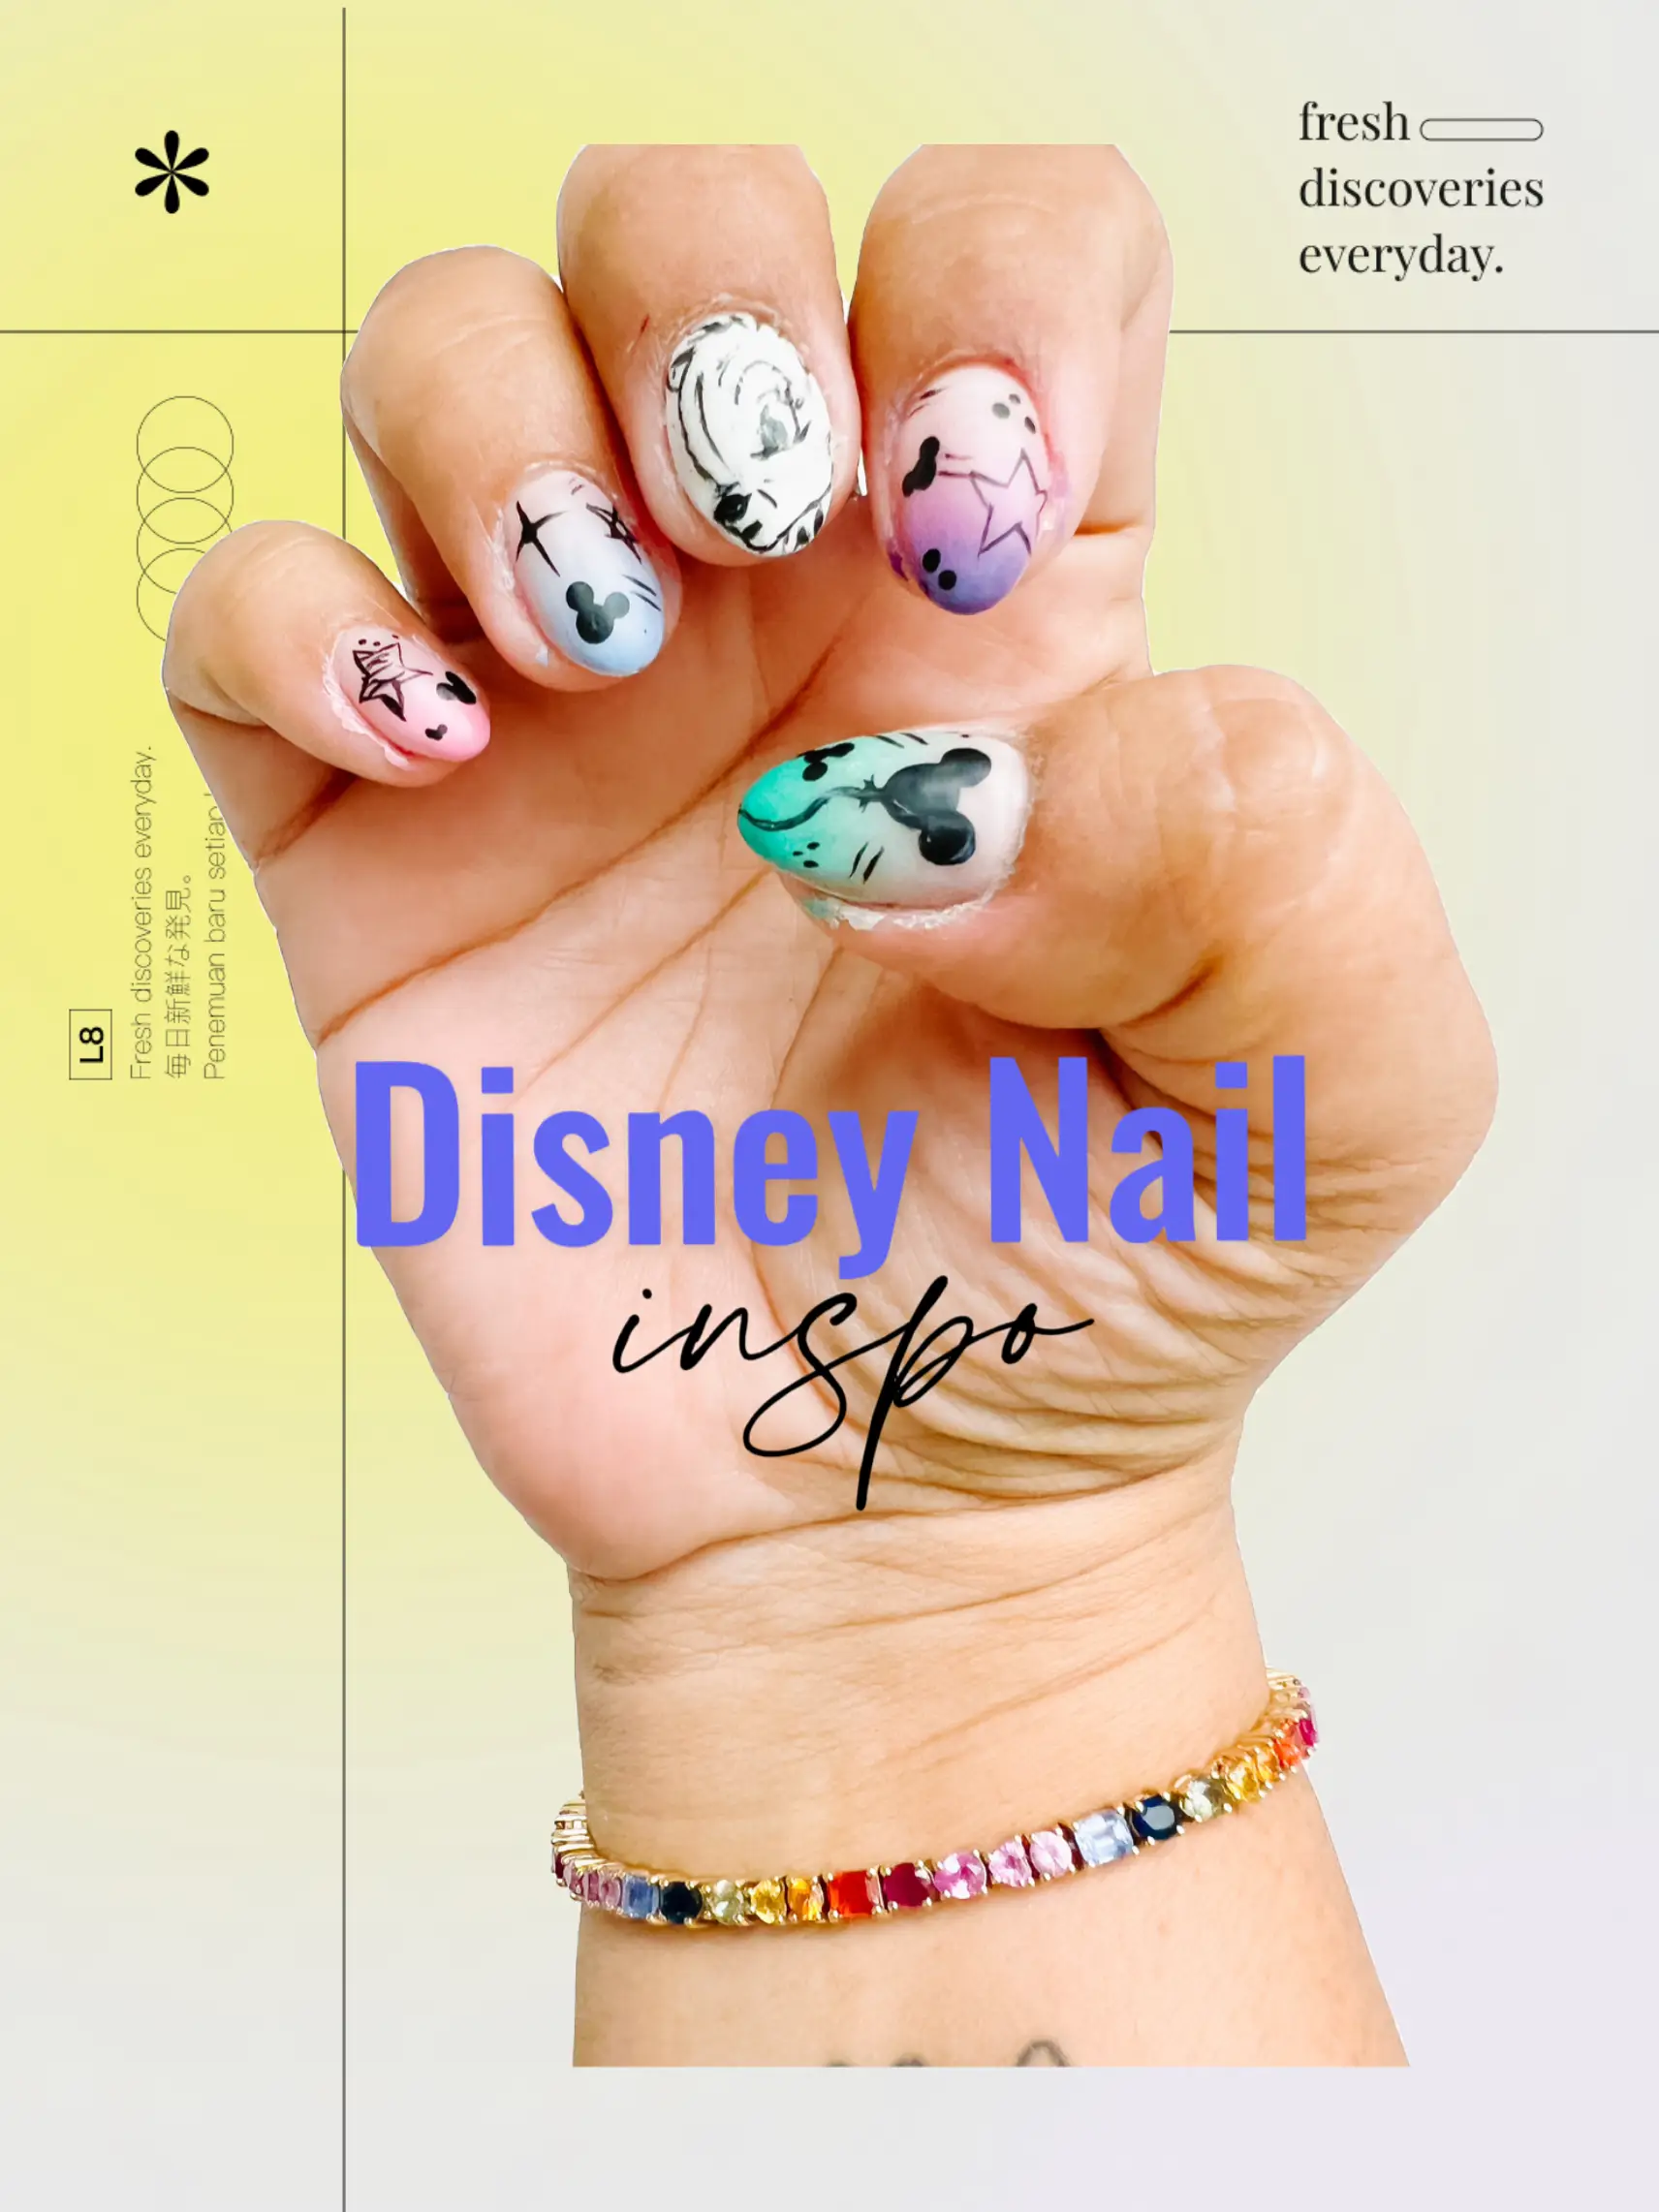 Disney Nail Inspo 🏰💅✨, Gallery posted by Marissa Busheé